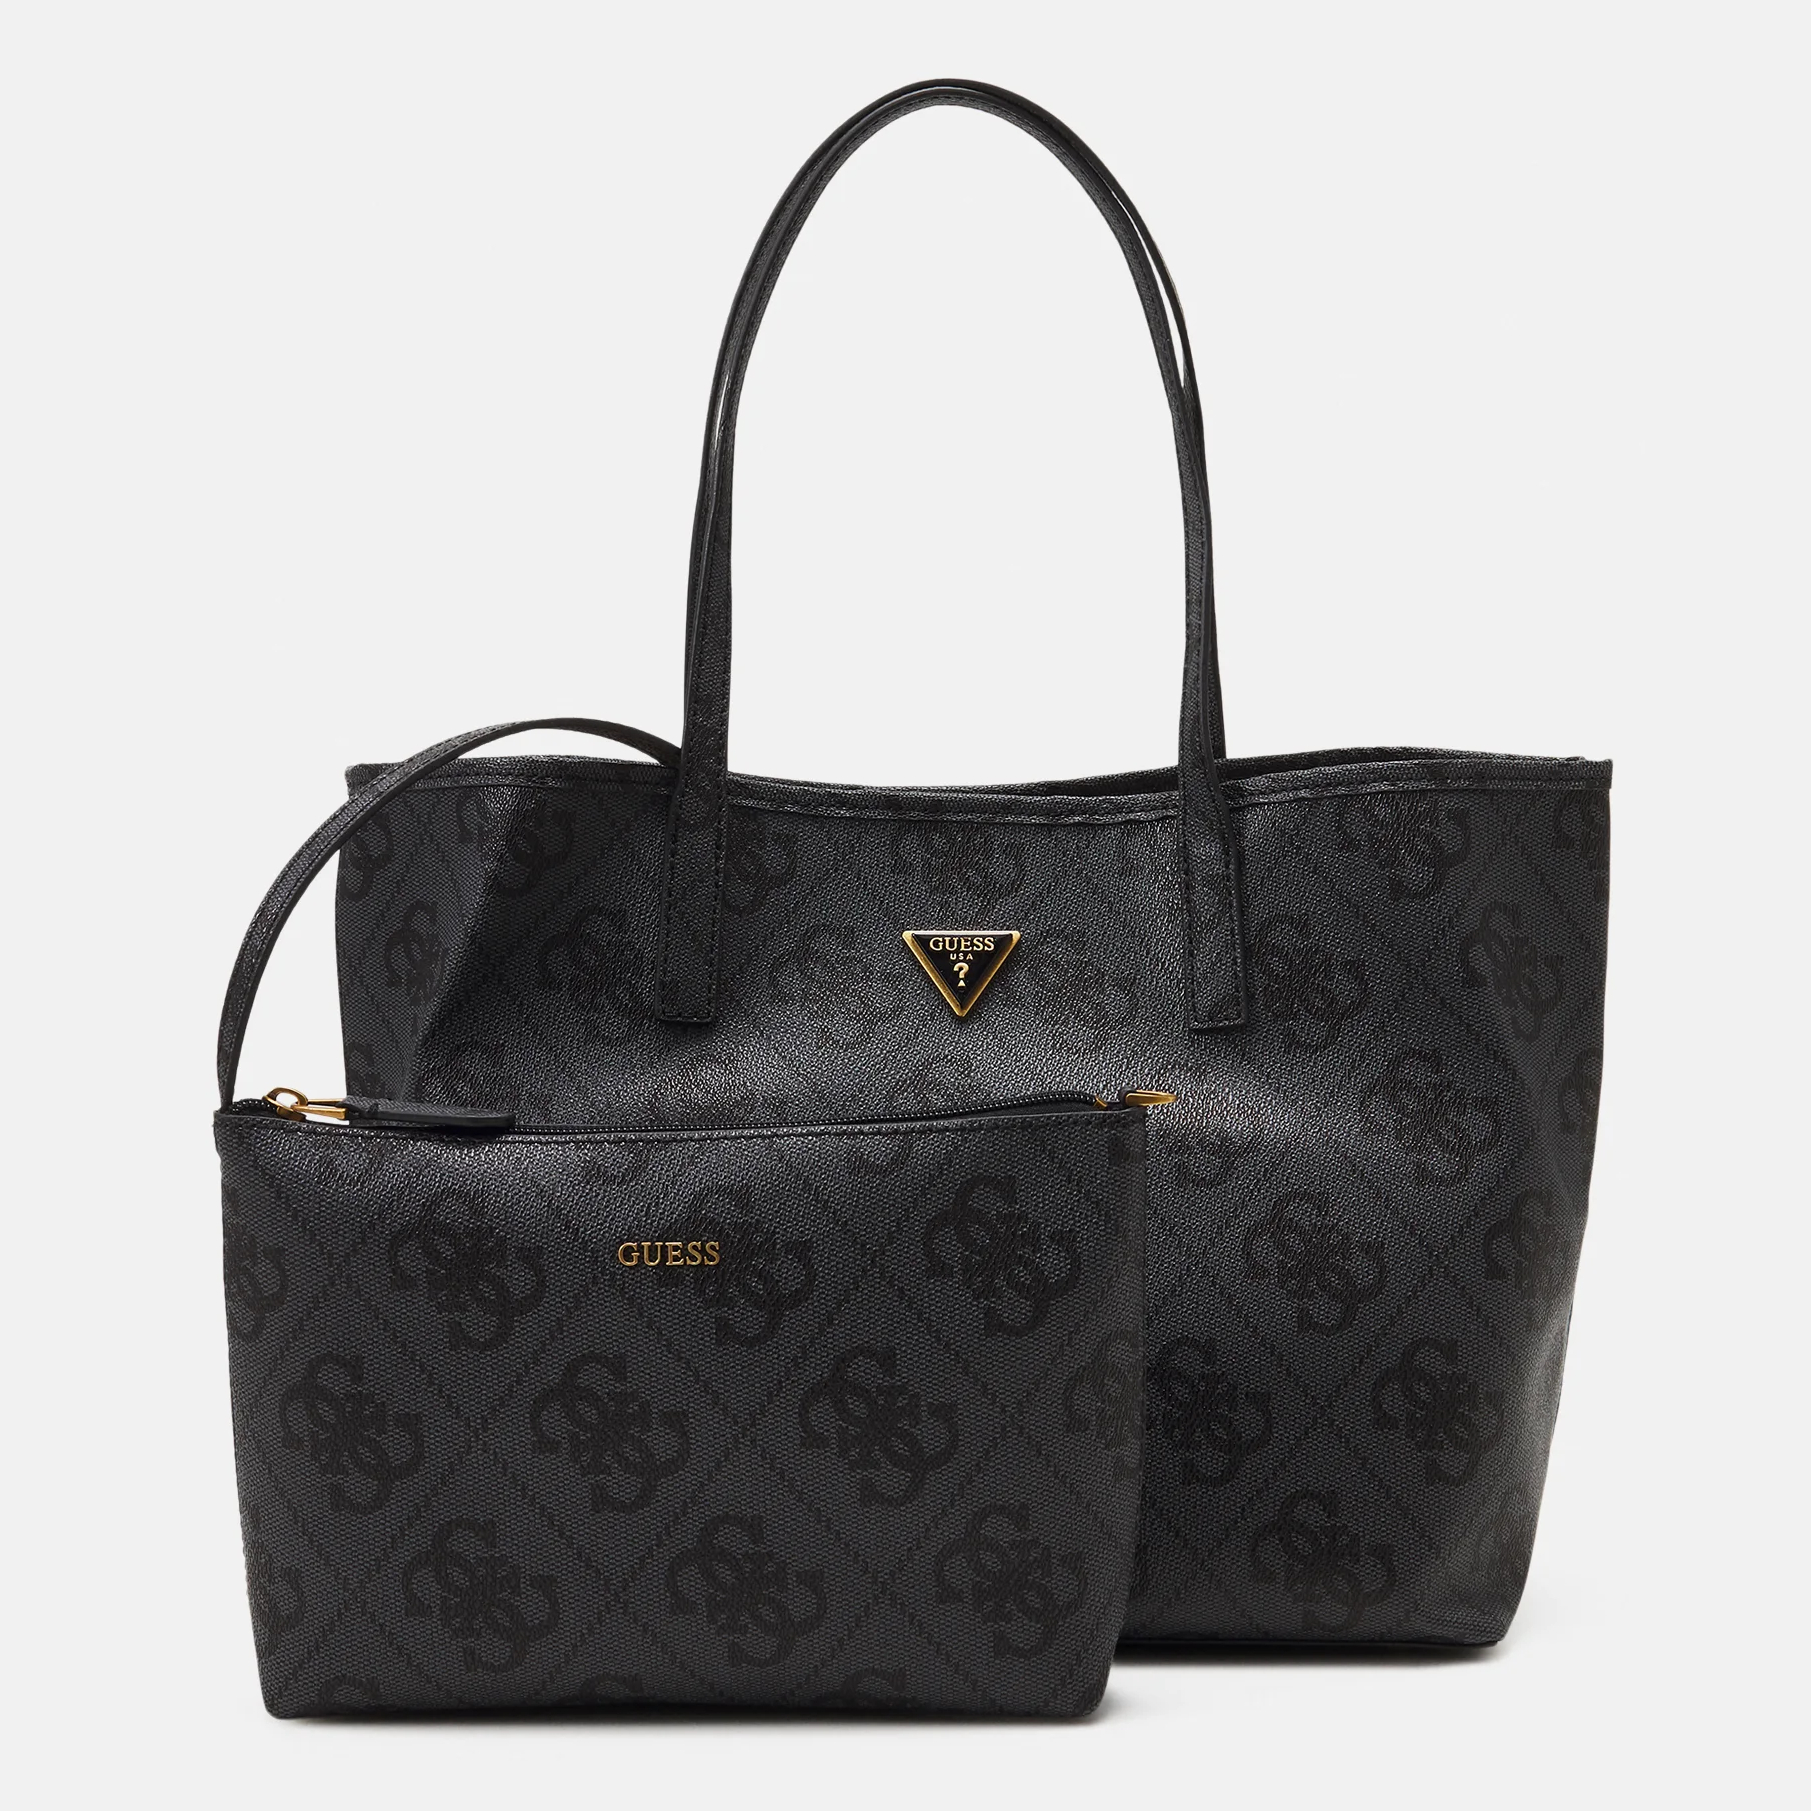 Комплект сумок Guess Vikky 4G Logo, 2 предмета, темно-серый чехол клатч чехол ру portafoglio magnetico для 4good s503m 4g